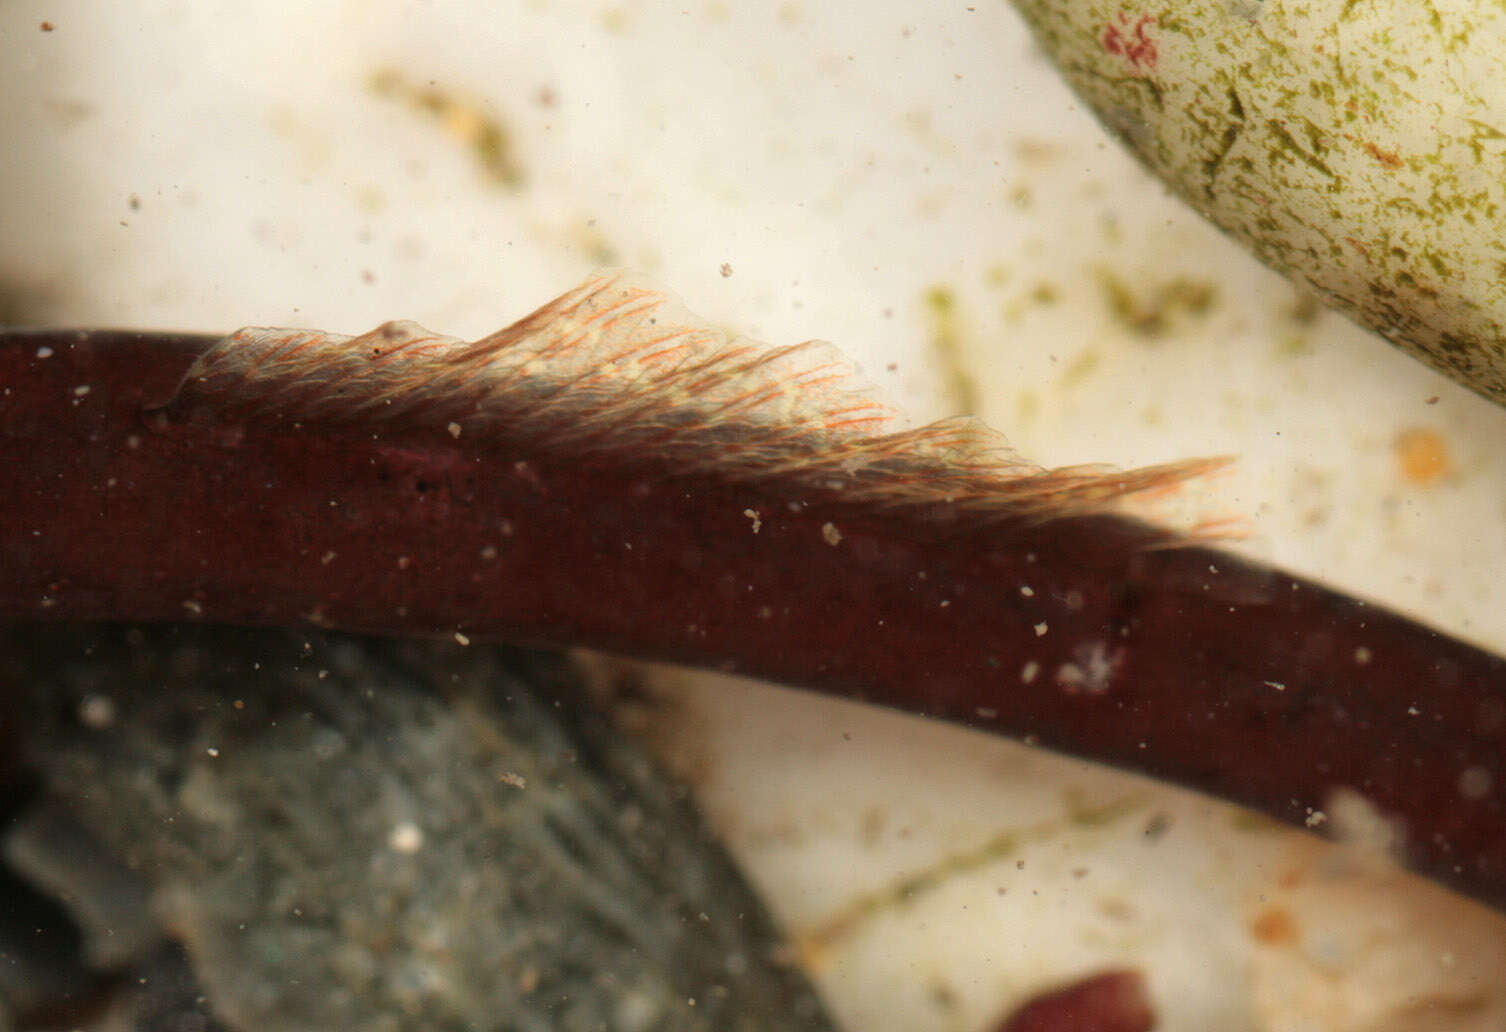 Image of Worm Pipefish